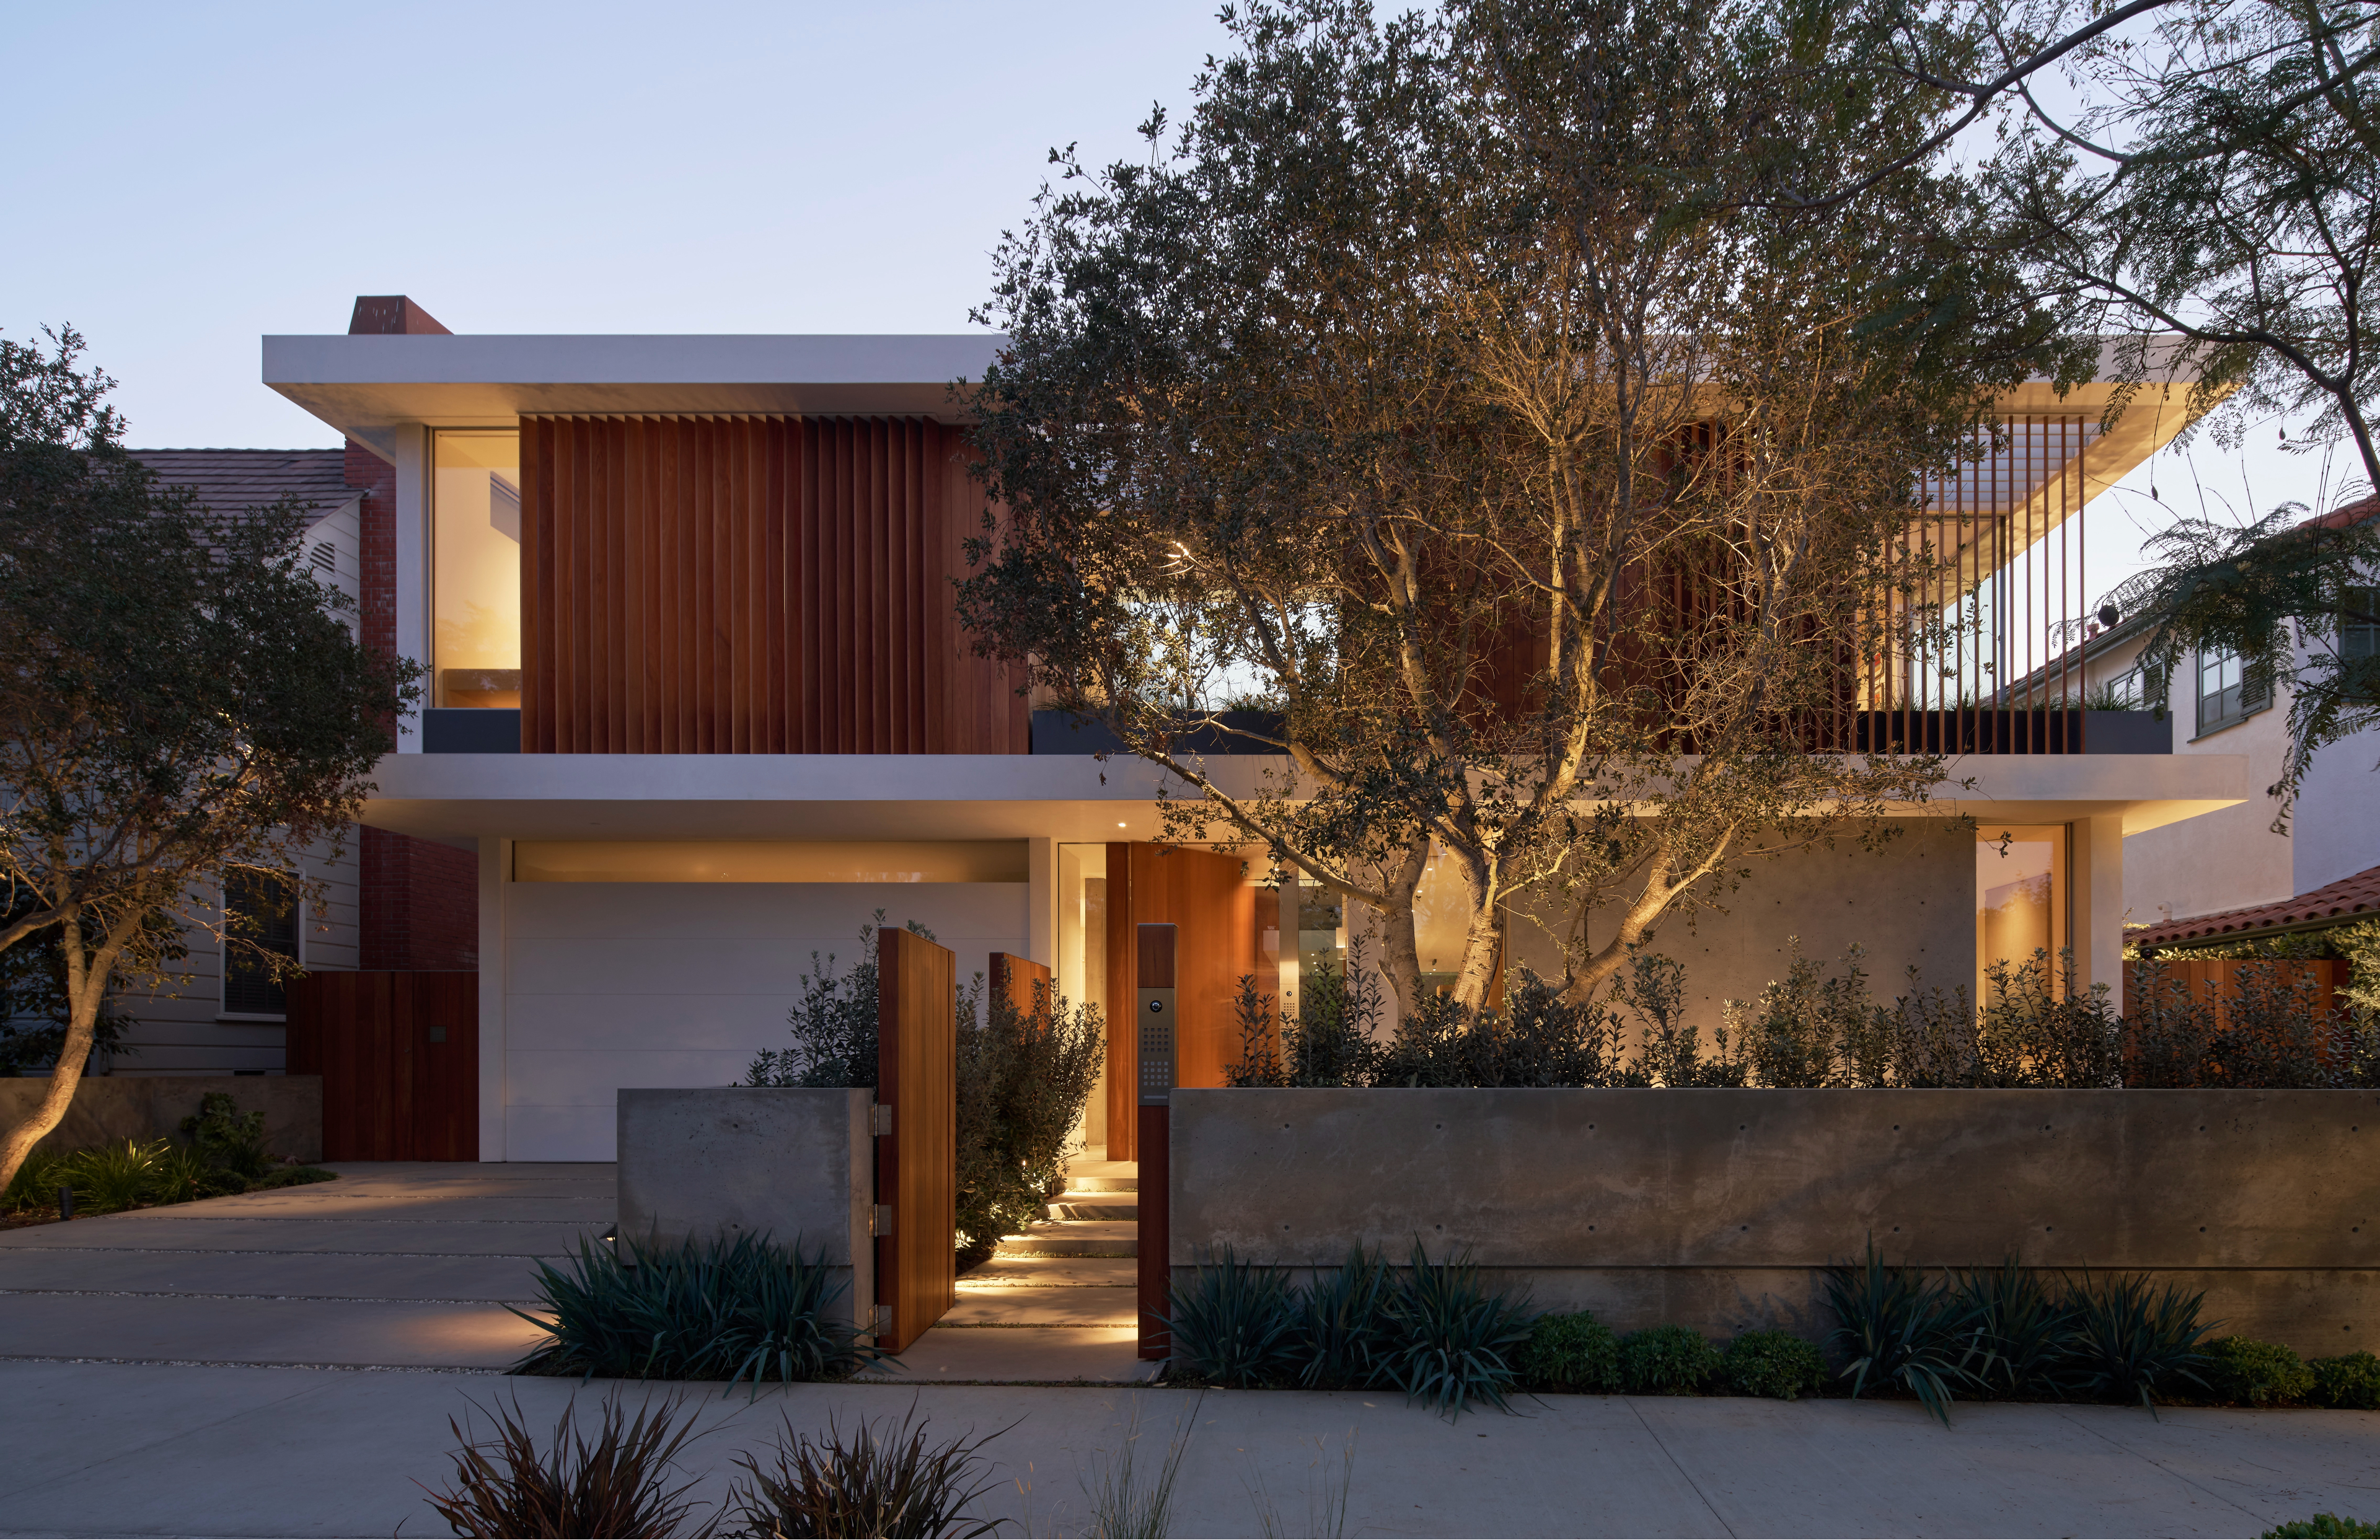 Step Inside Architect Frank Gehry's Santa Monica Dream House